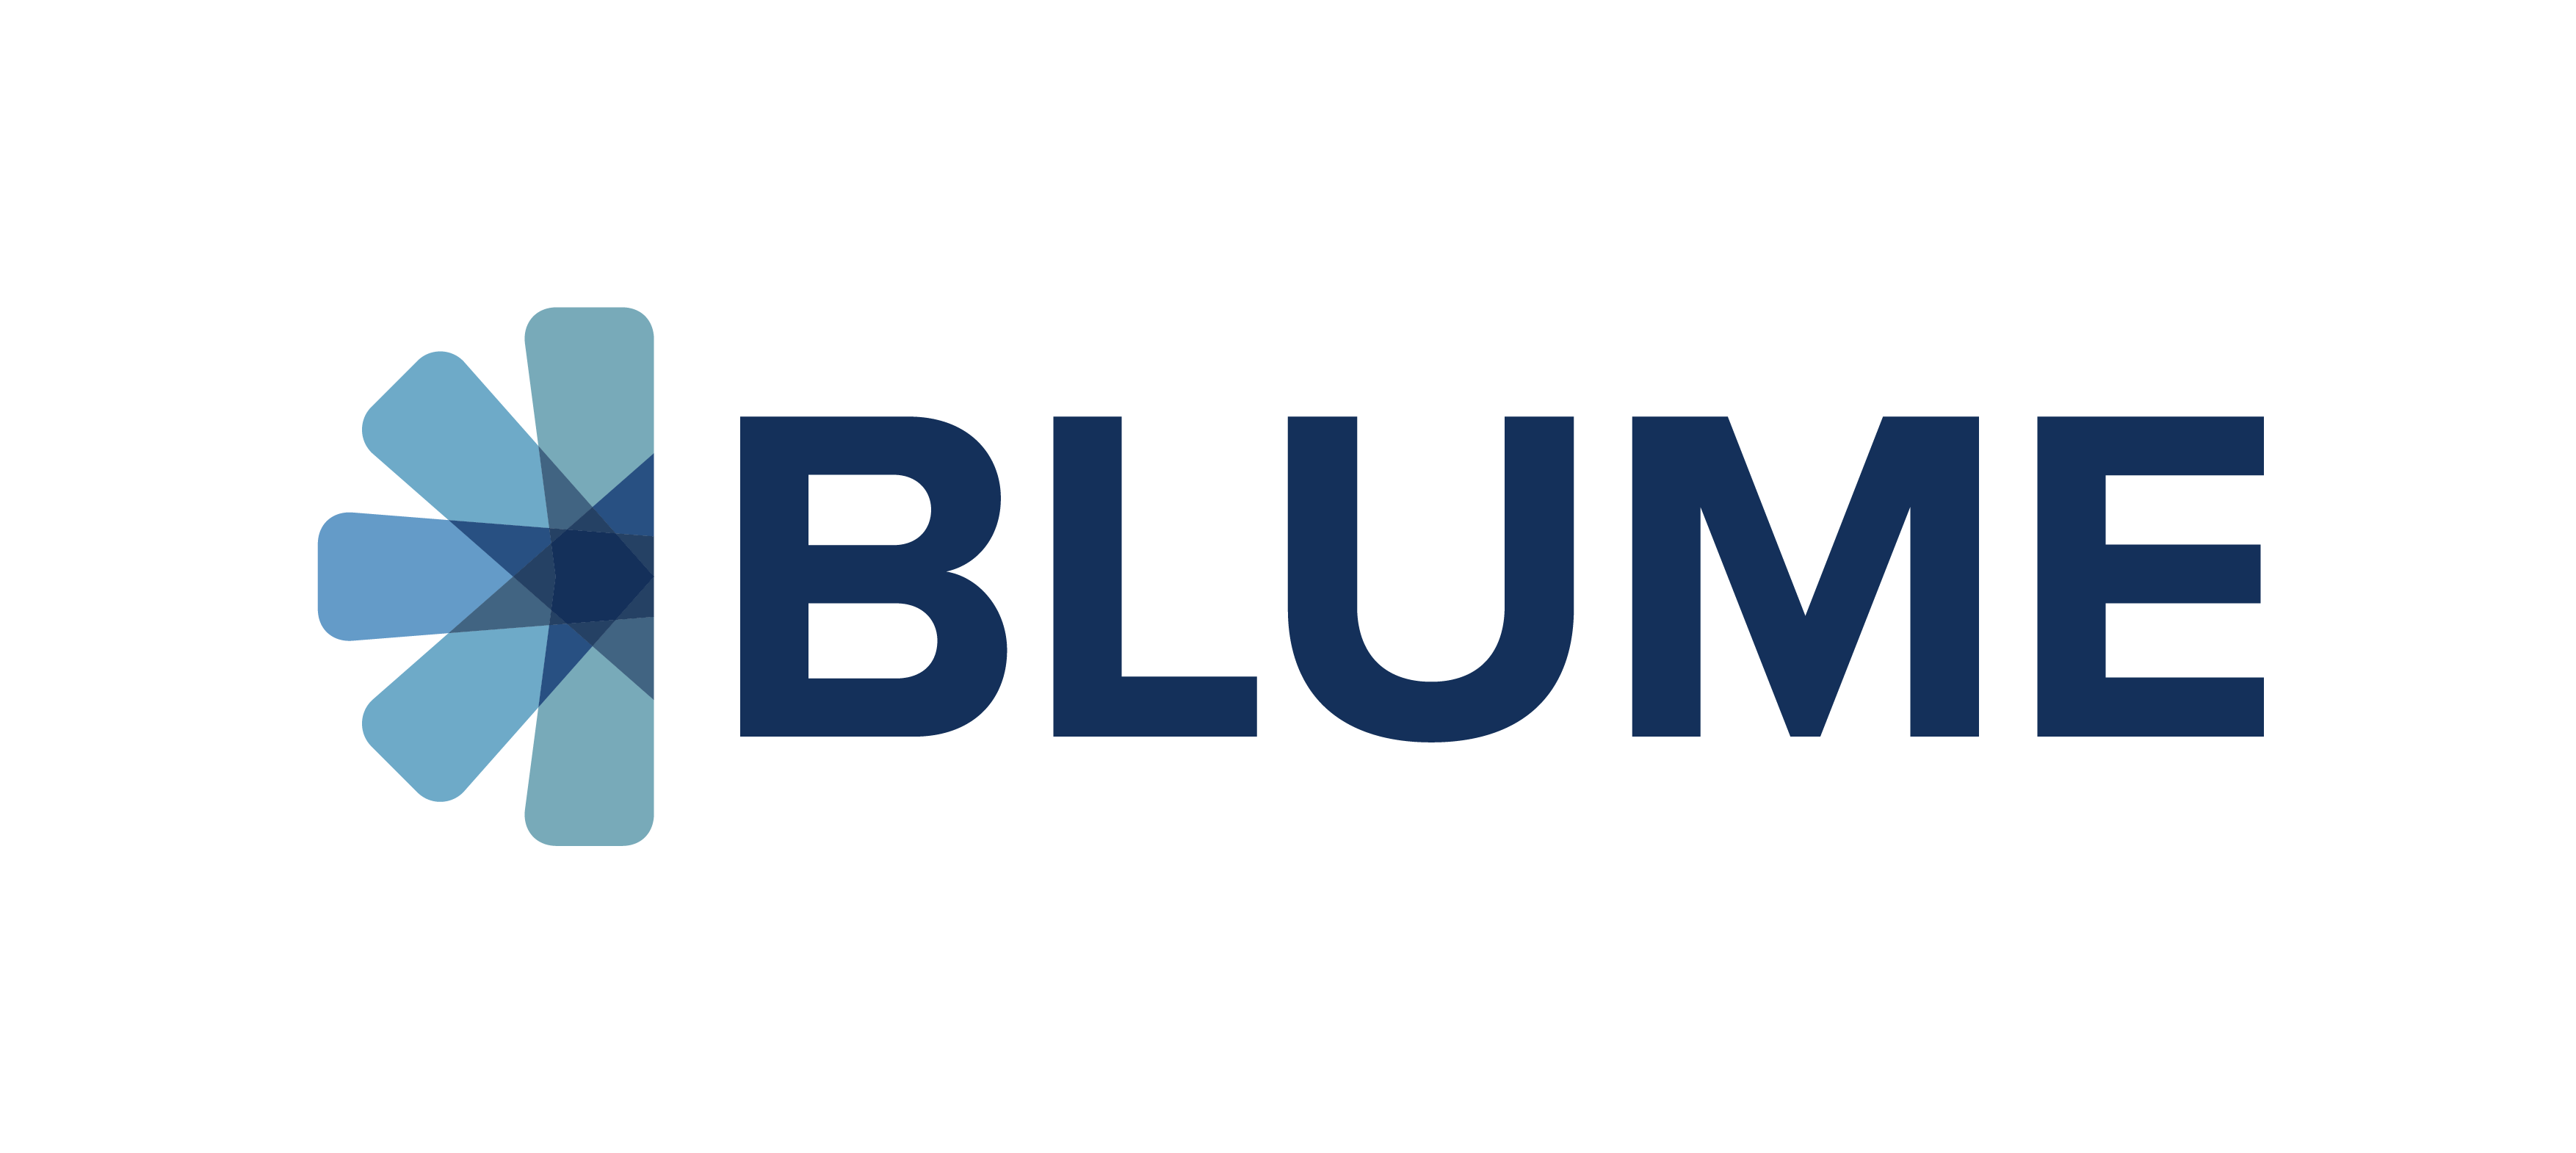 Blume Ventures - Crunchbase Investor Profile & Investments